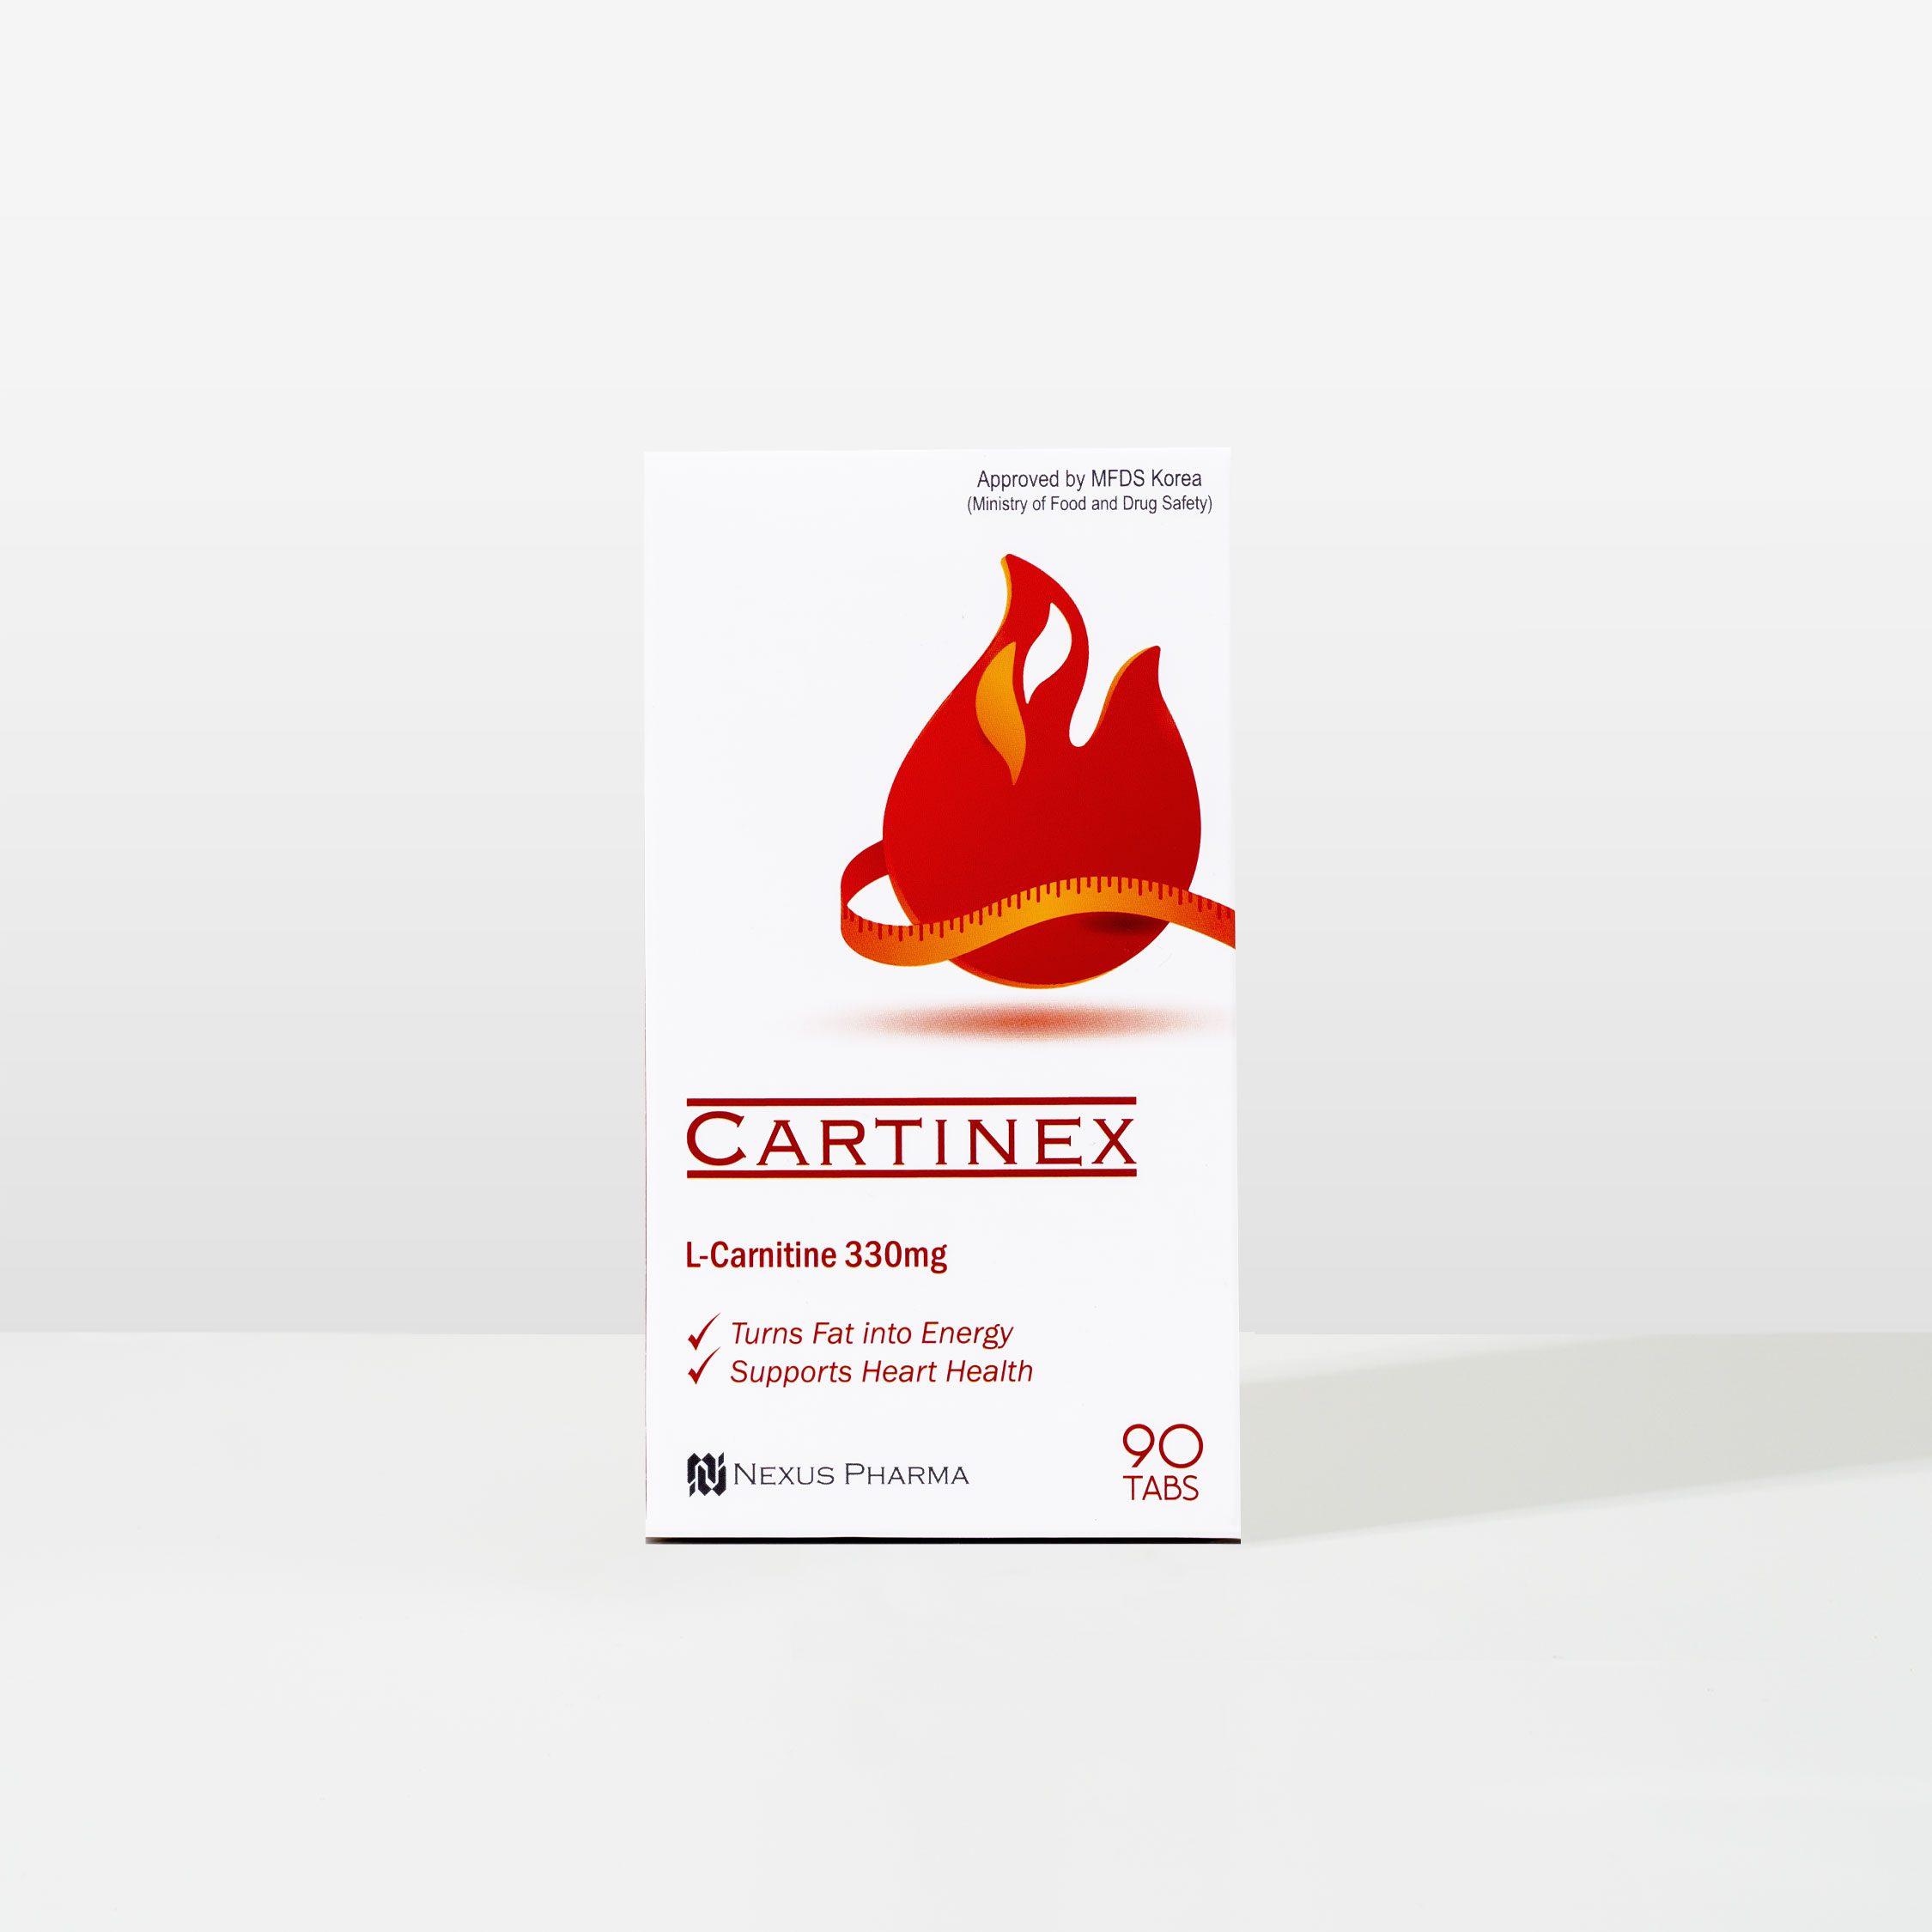 Cartinex Tabs - Nexus Pharma